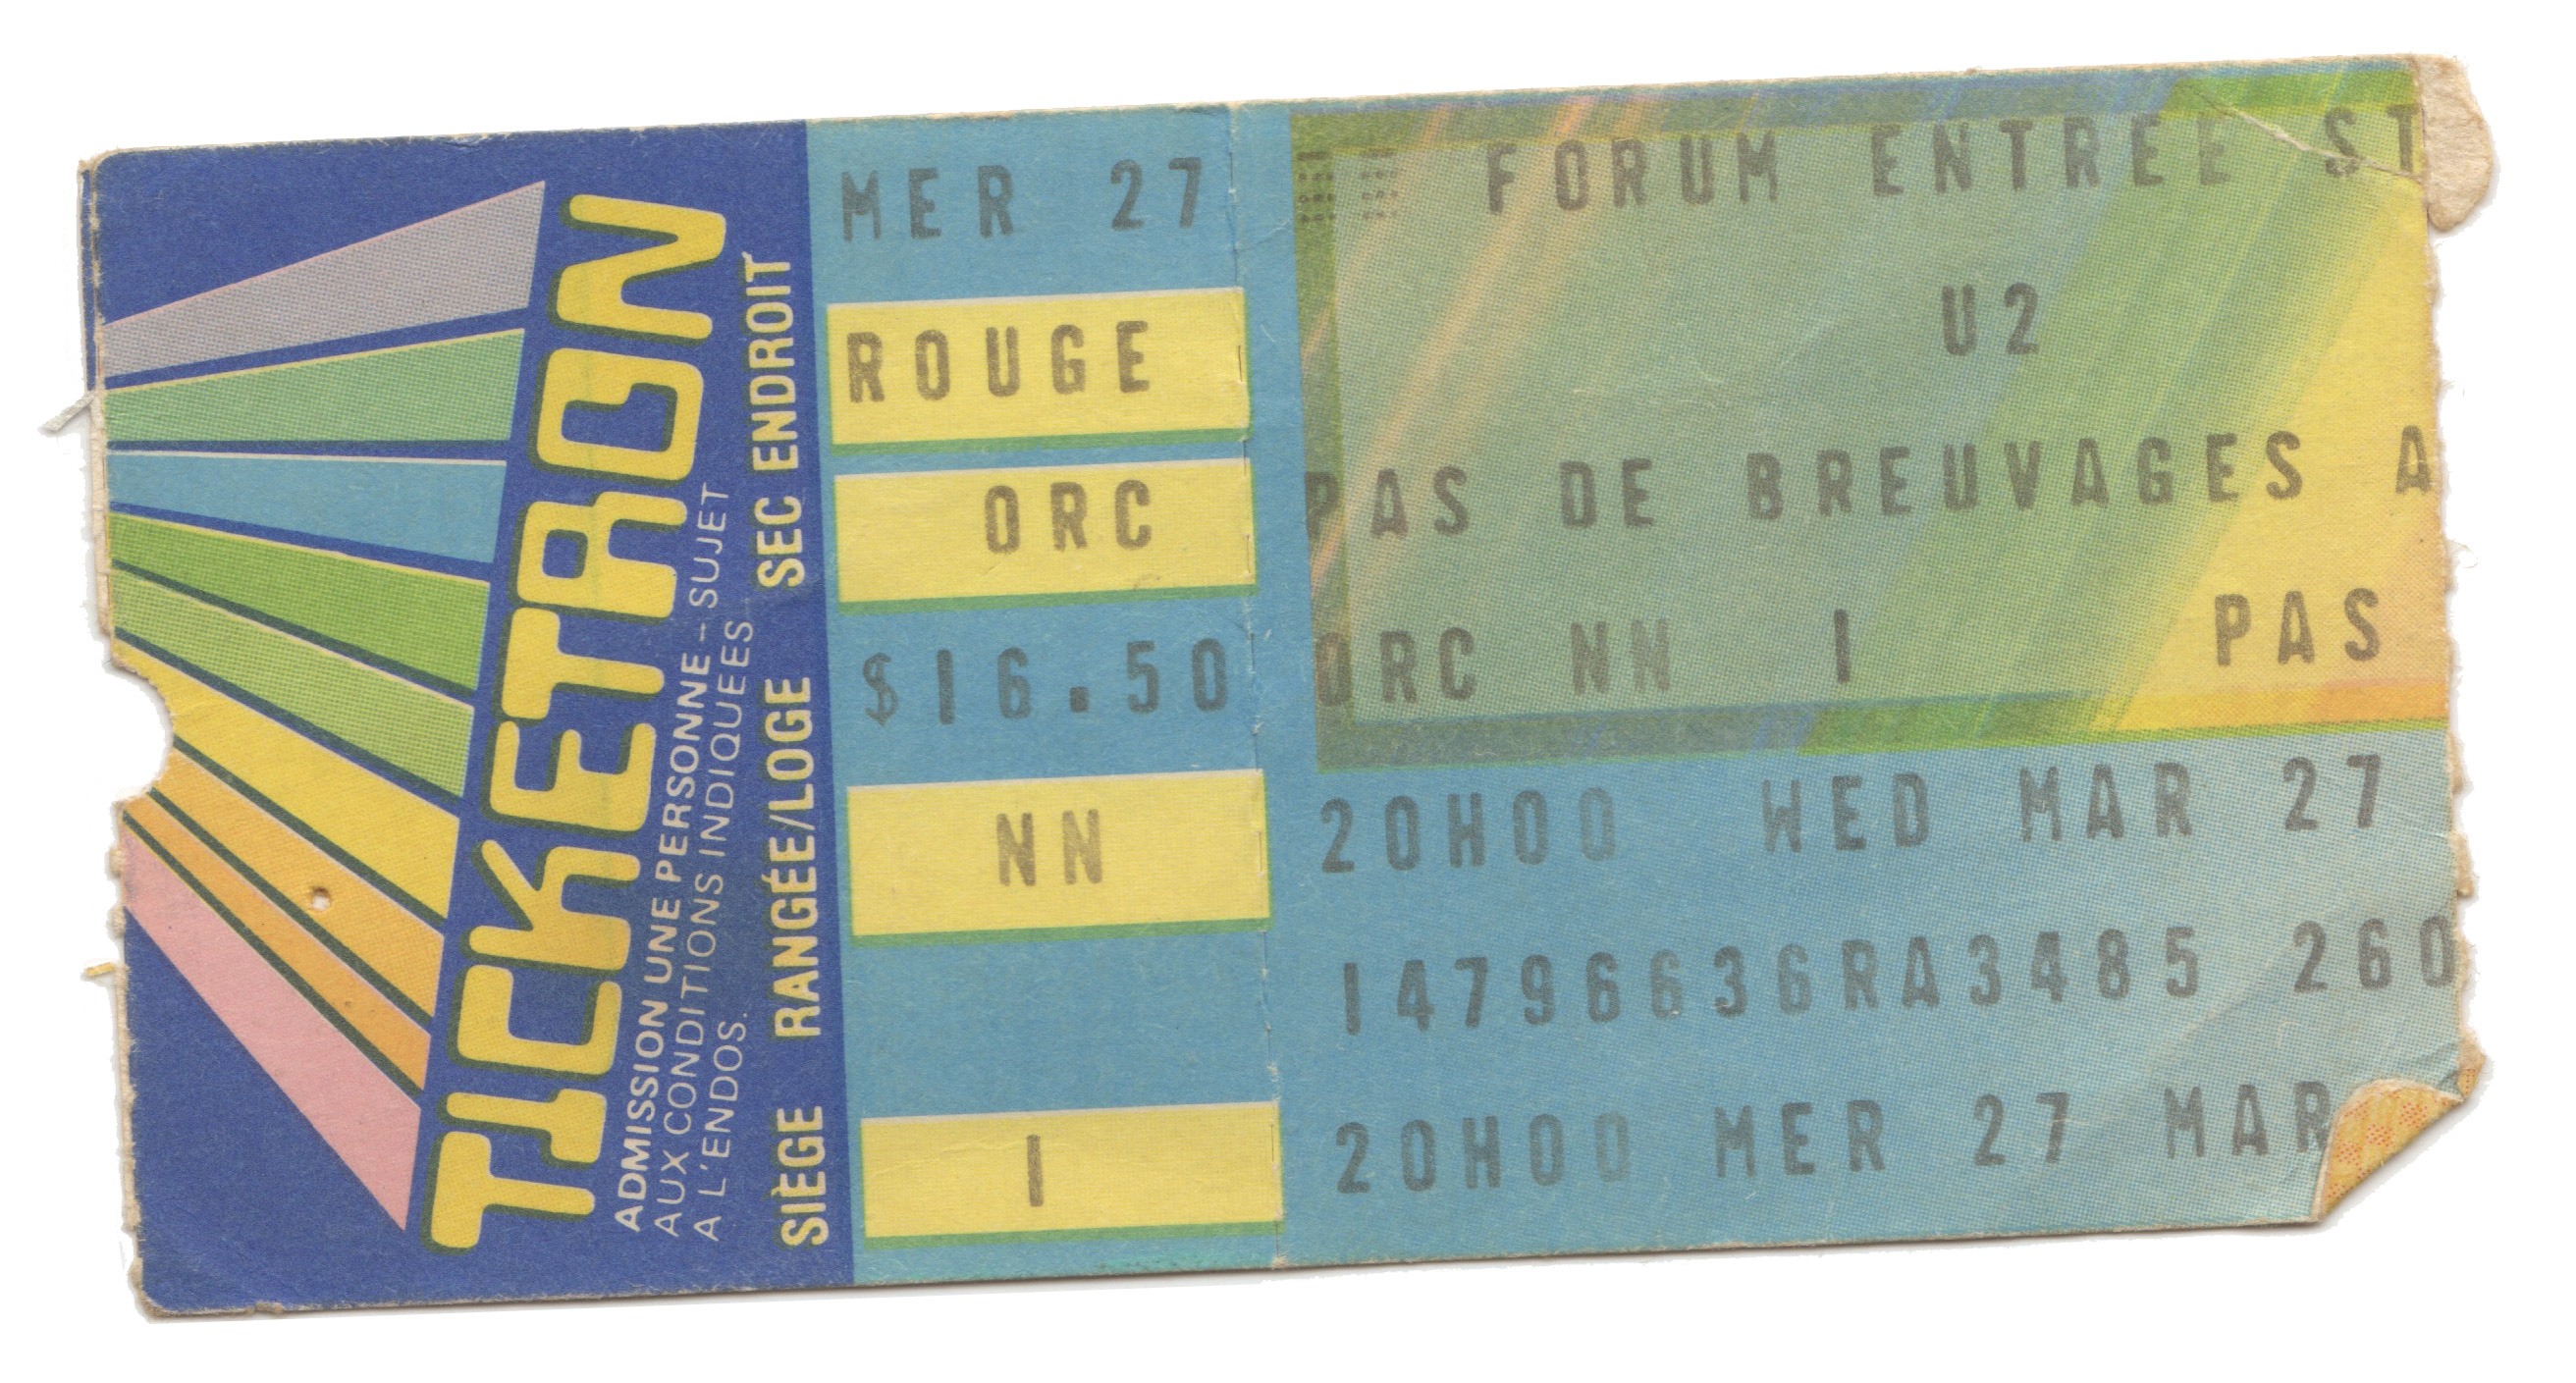 U2: Montreal Forum, Montreal